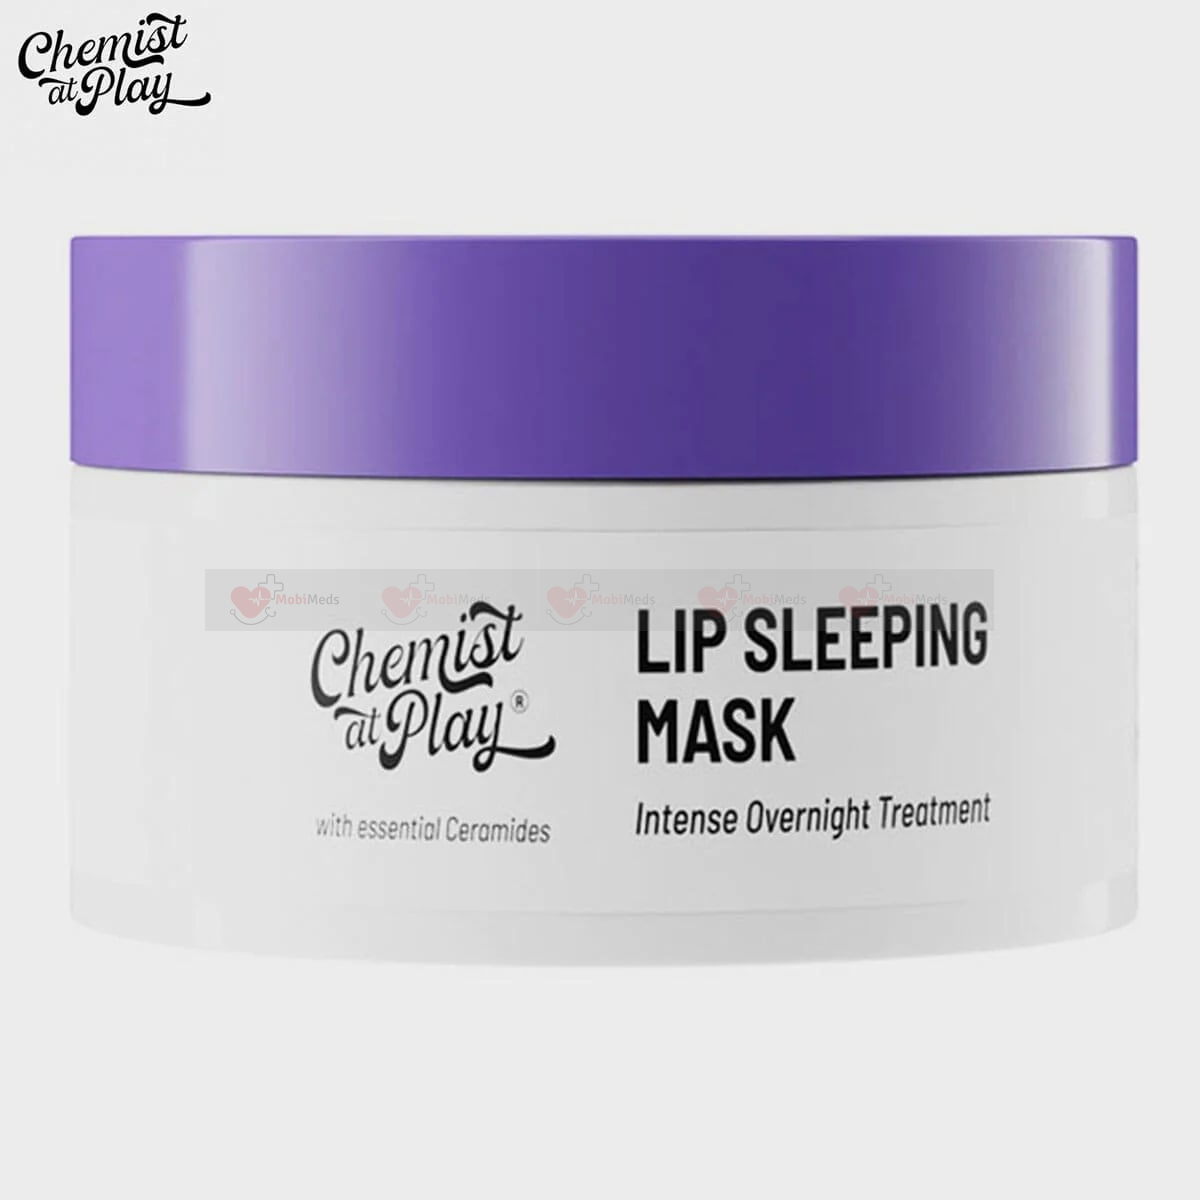 Chemist At Play Lip Sleeping Mask -15GM (7% Vitamin C + Shea Butter + Glycerine)